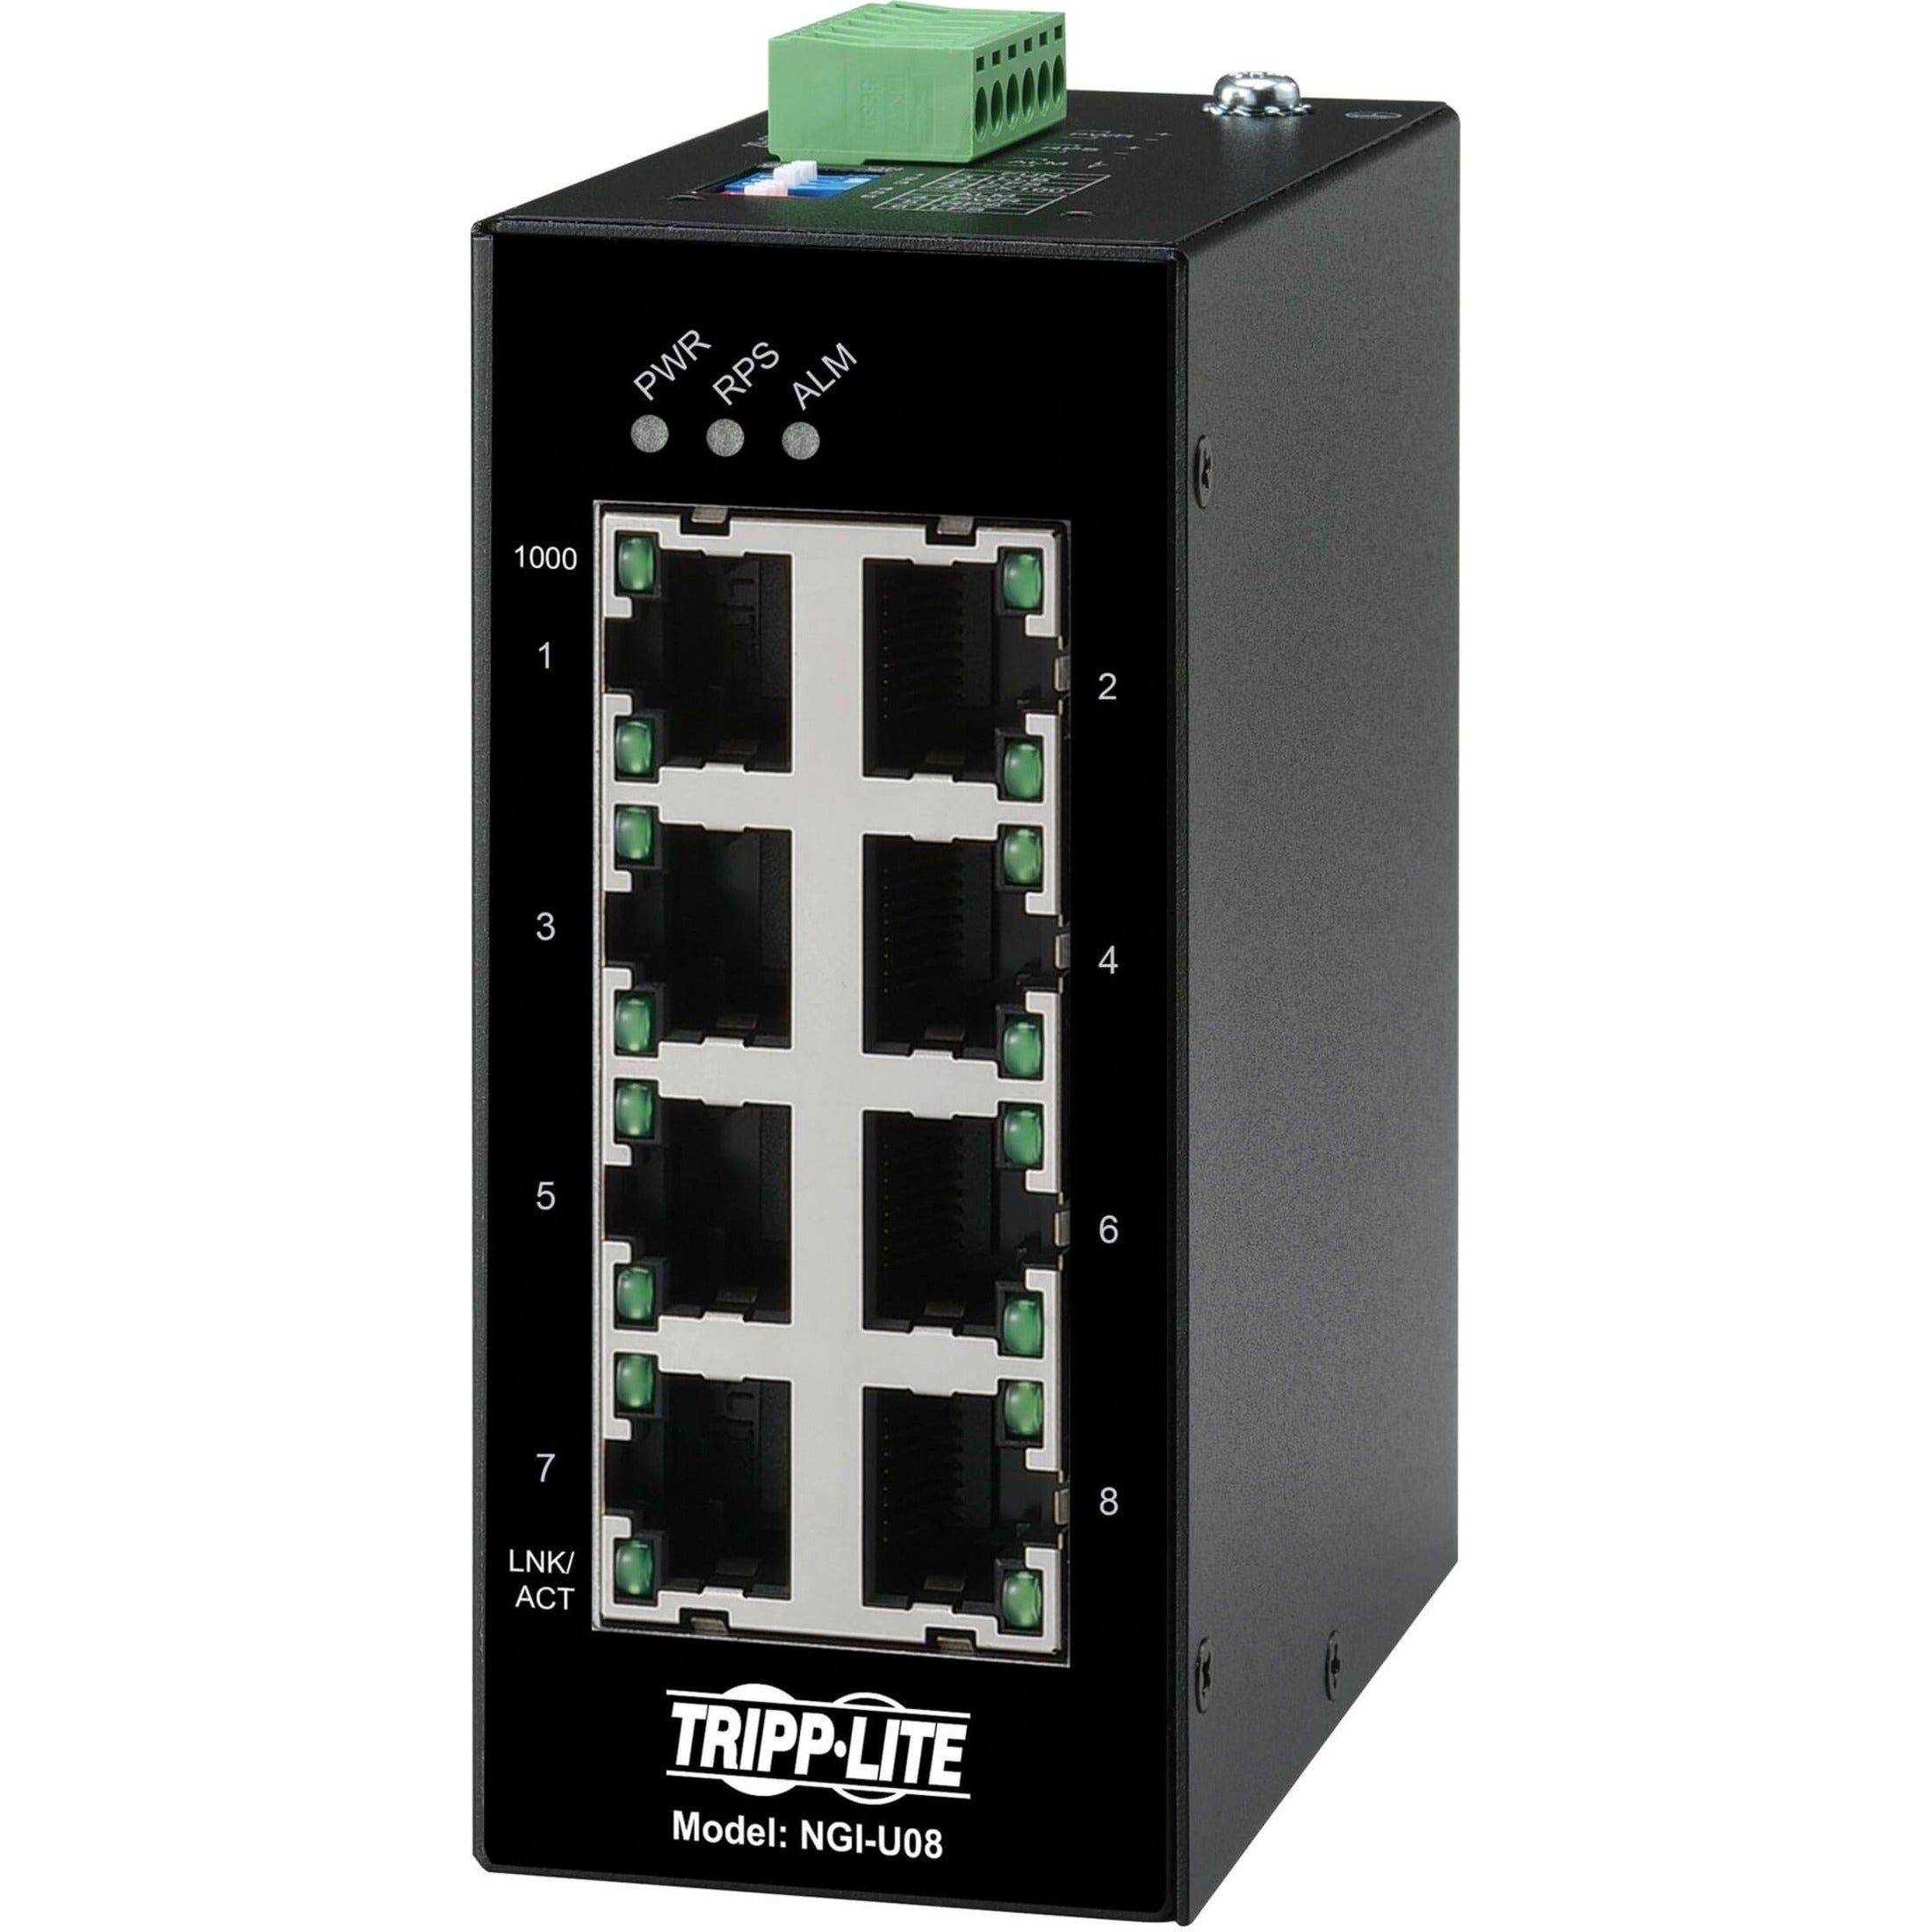 Tripp Lite NGI-U08 Ethernet Switch Unmanaged 8-Port Industrial 10/100/1000 Mbps DIN TAA Compliant Tripp Lite NGI-U08 Ethernet Schalter Unmanaged 8-Port Industrie 10/100/1000 Mbps DIN TAA Konform